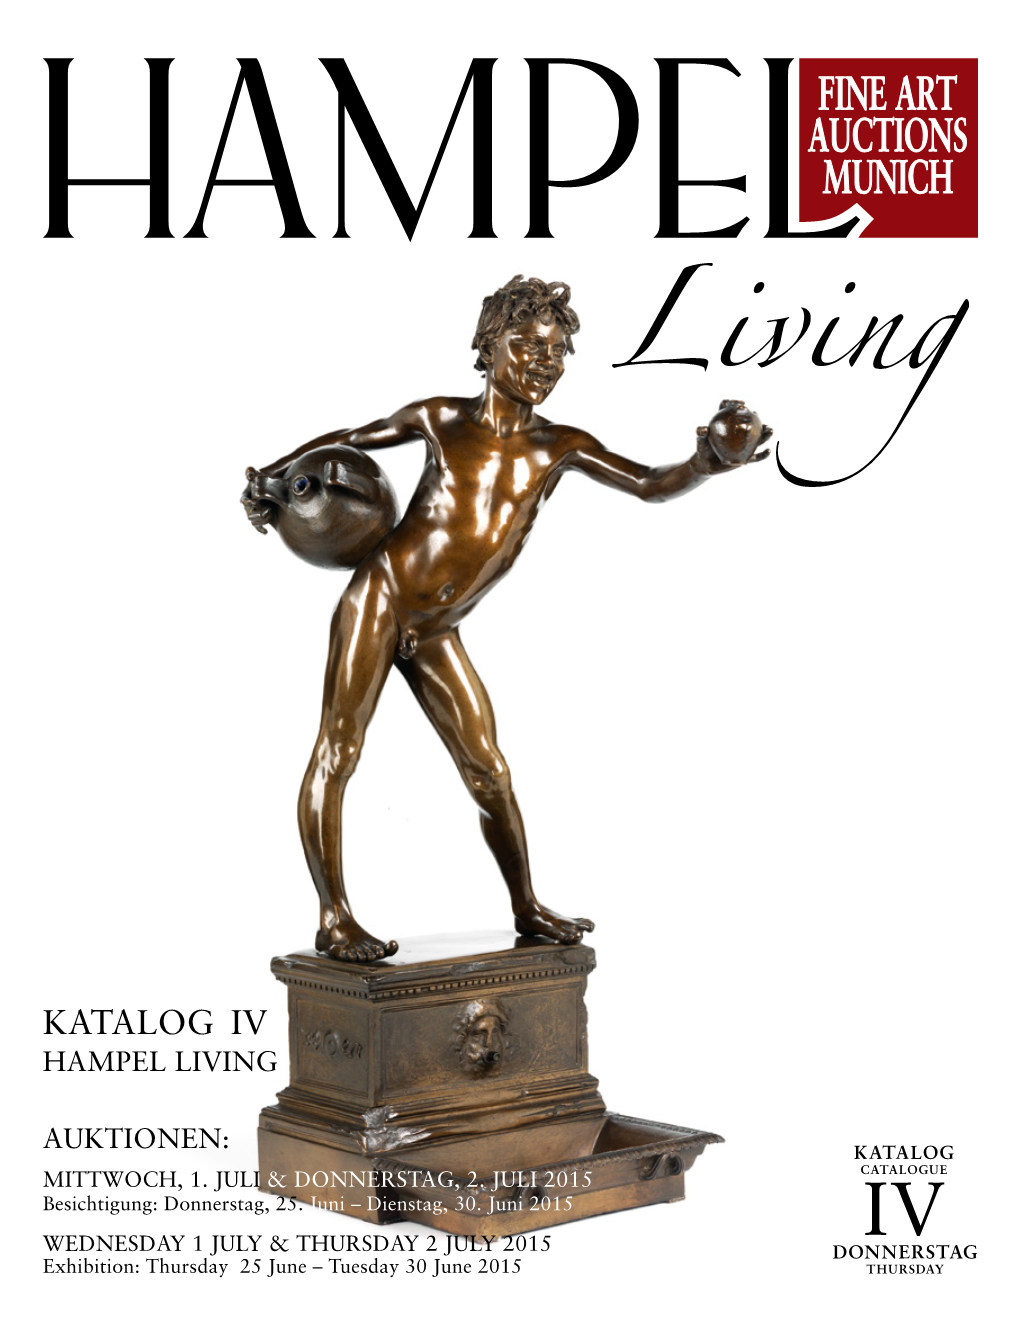 Katalog Iv Hampel Living